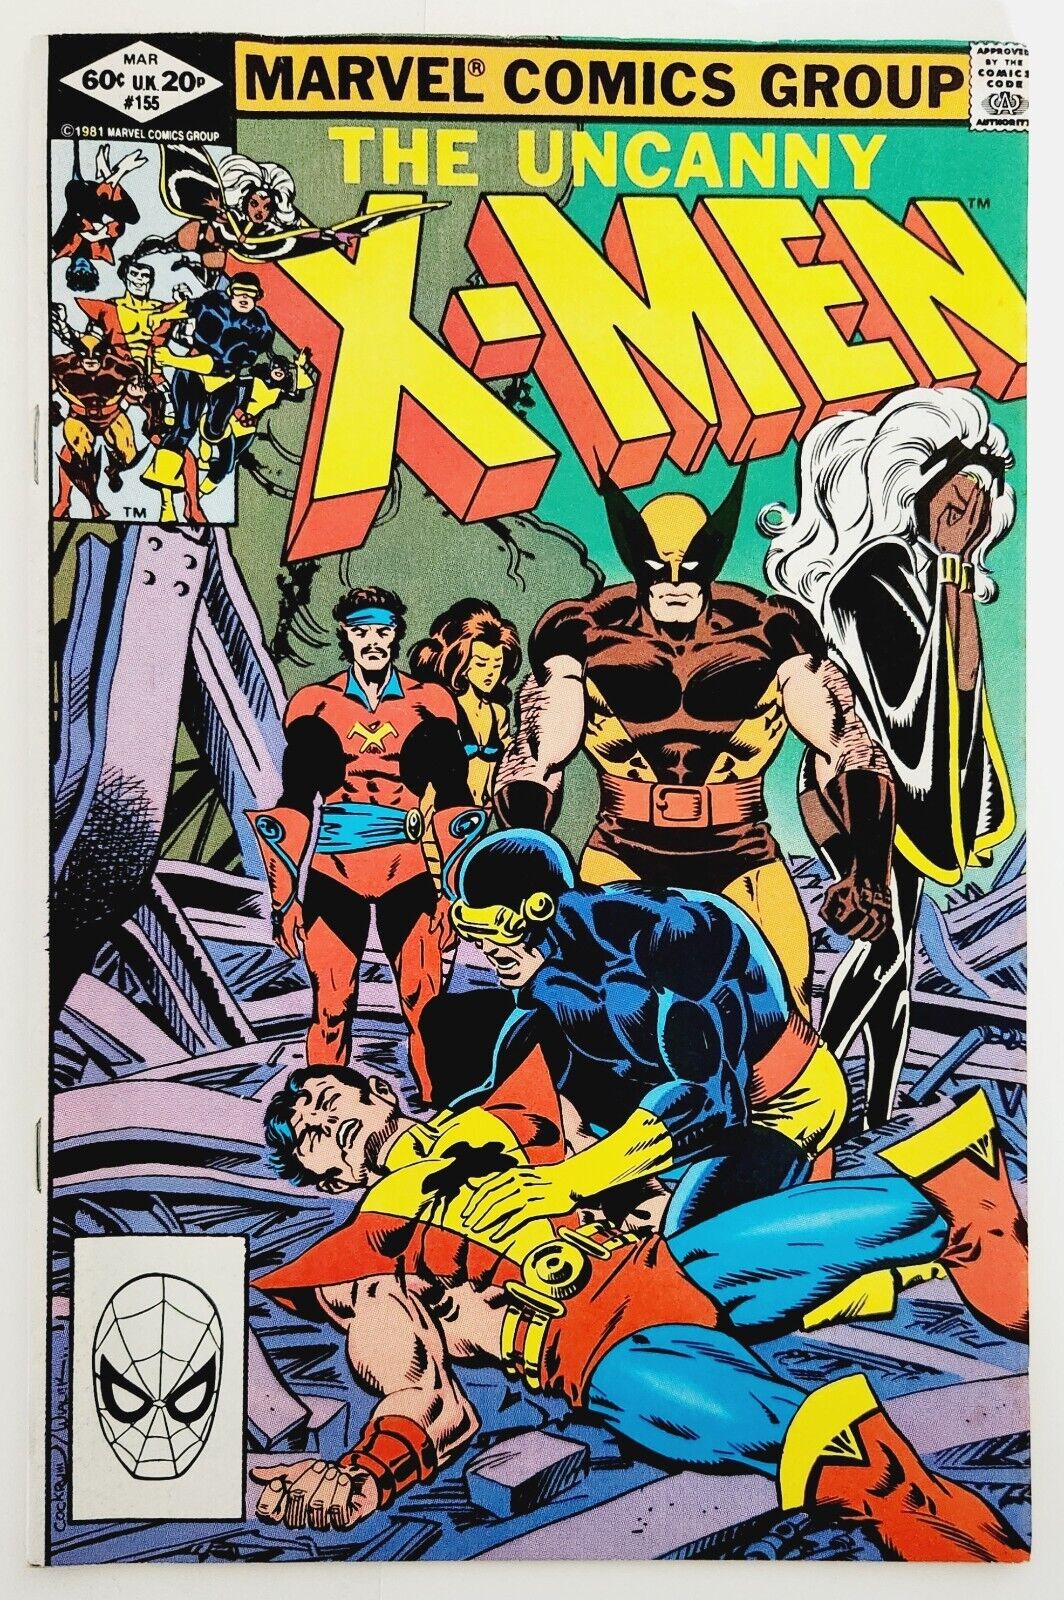 UNCANNY X-MEN BACK ISSUES